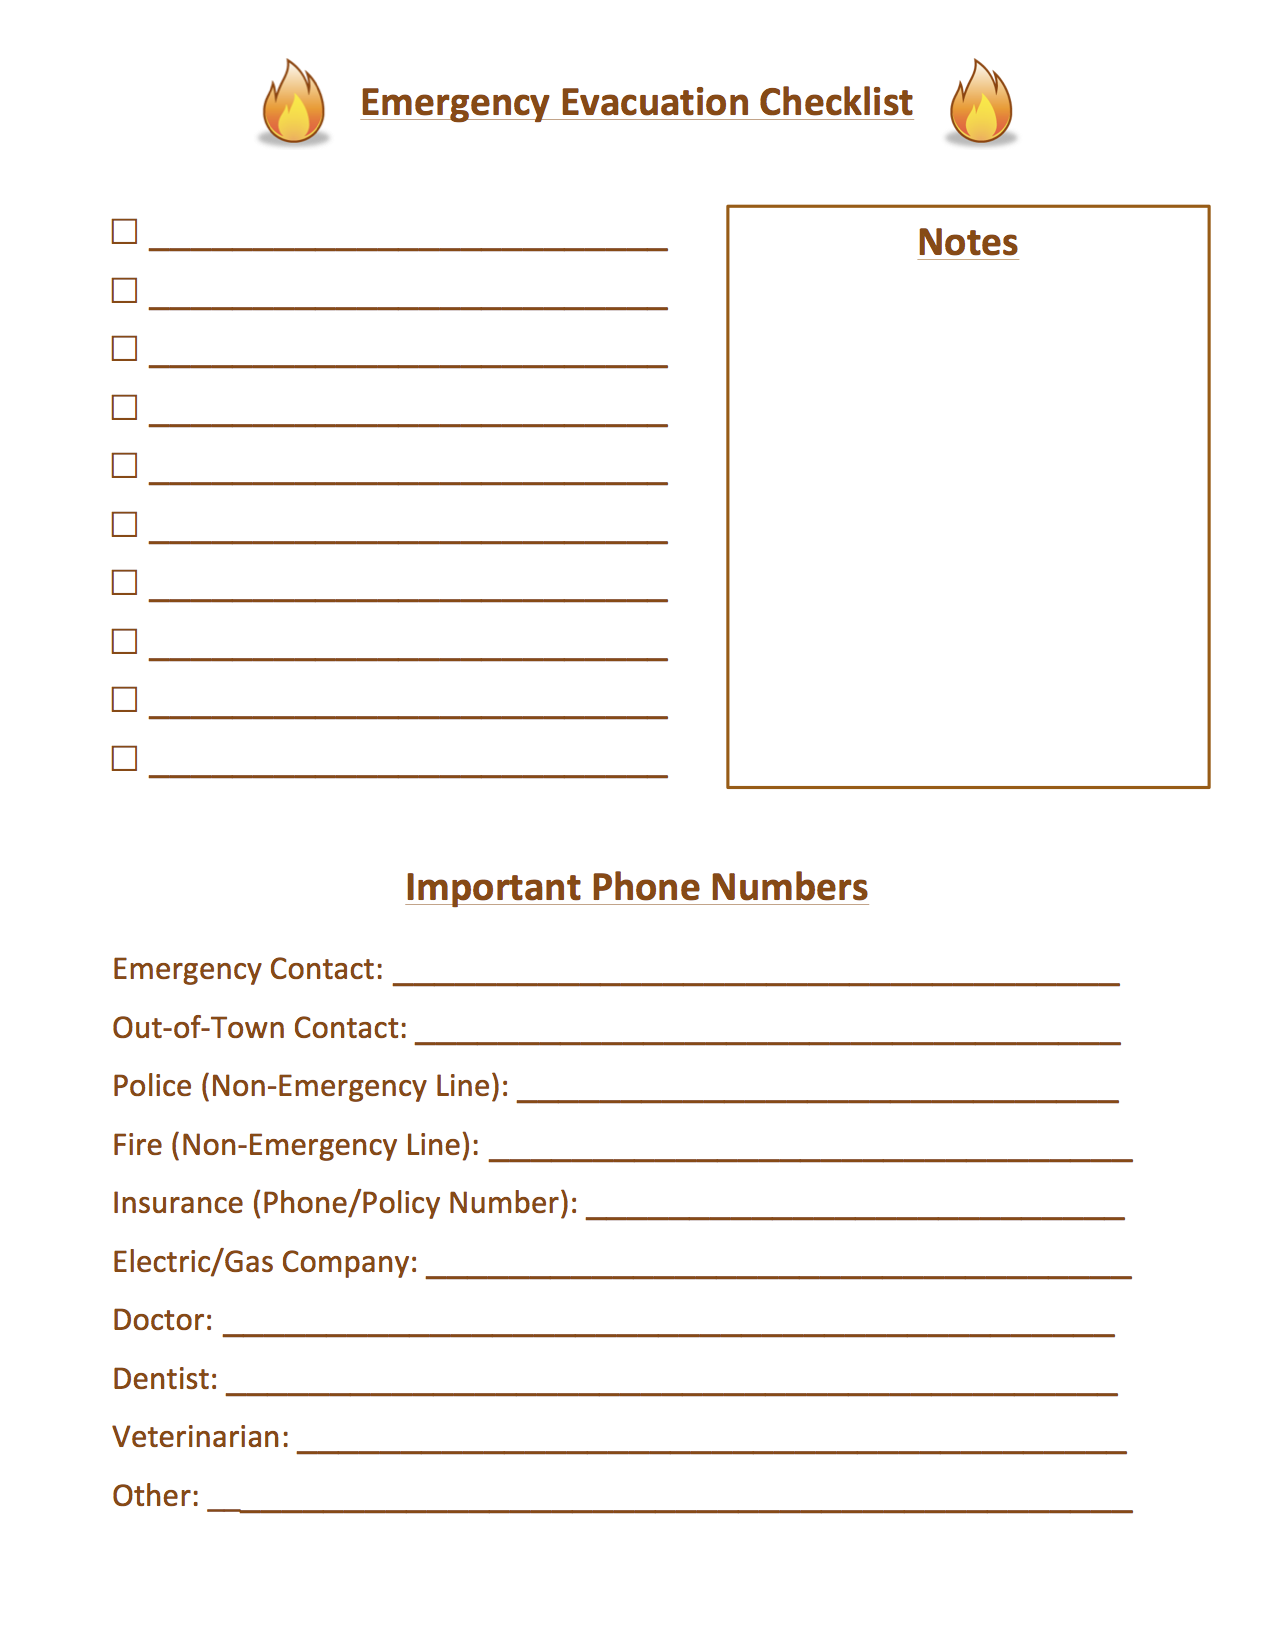 Emergency Evacuation Checklist  HMH Designs With Regard To Emergency Checklist Template Intended For Emergency Checklist Template